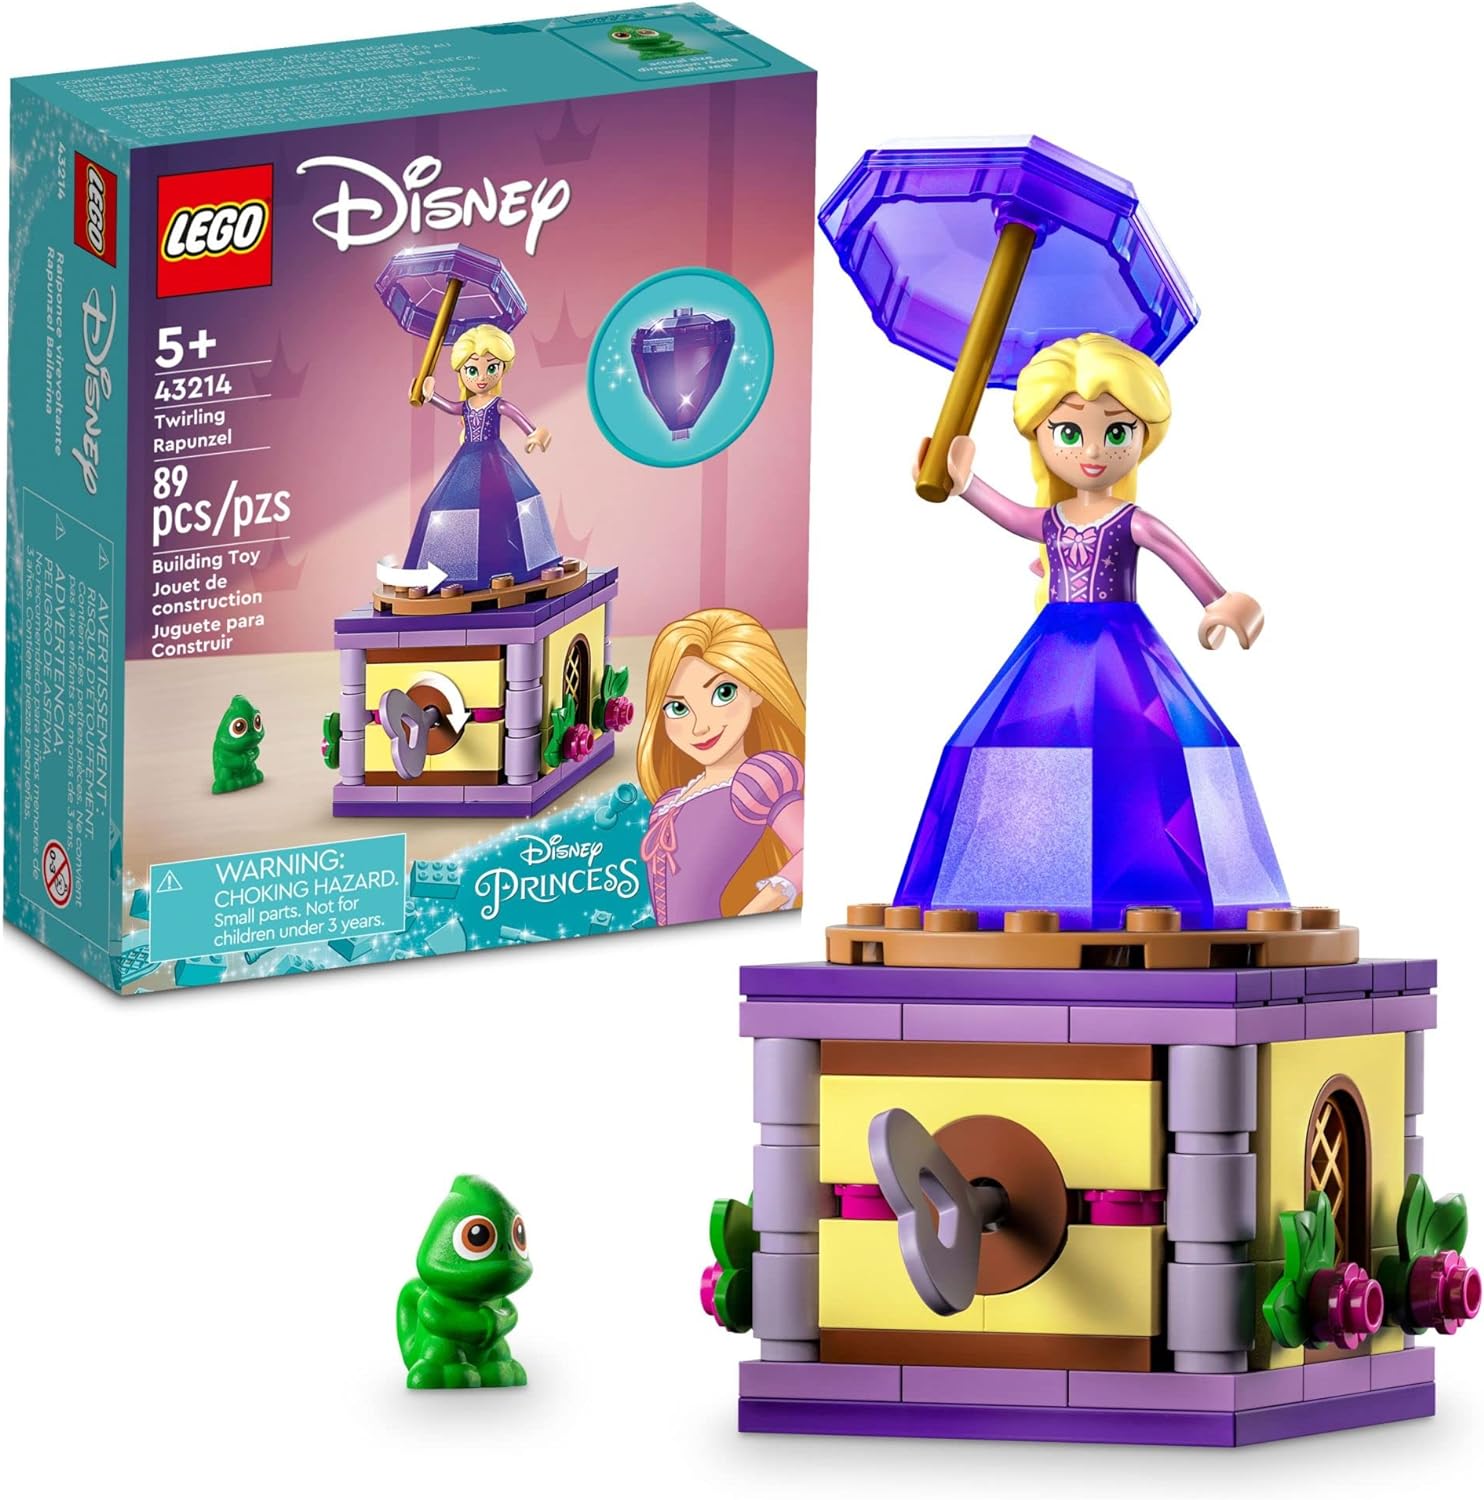 89-Piece Lego Disney Princess Twirling Rapunzel Toy Set $6.39 + Free Shipping w/ Walmart+, Prime or on $35+